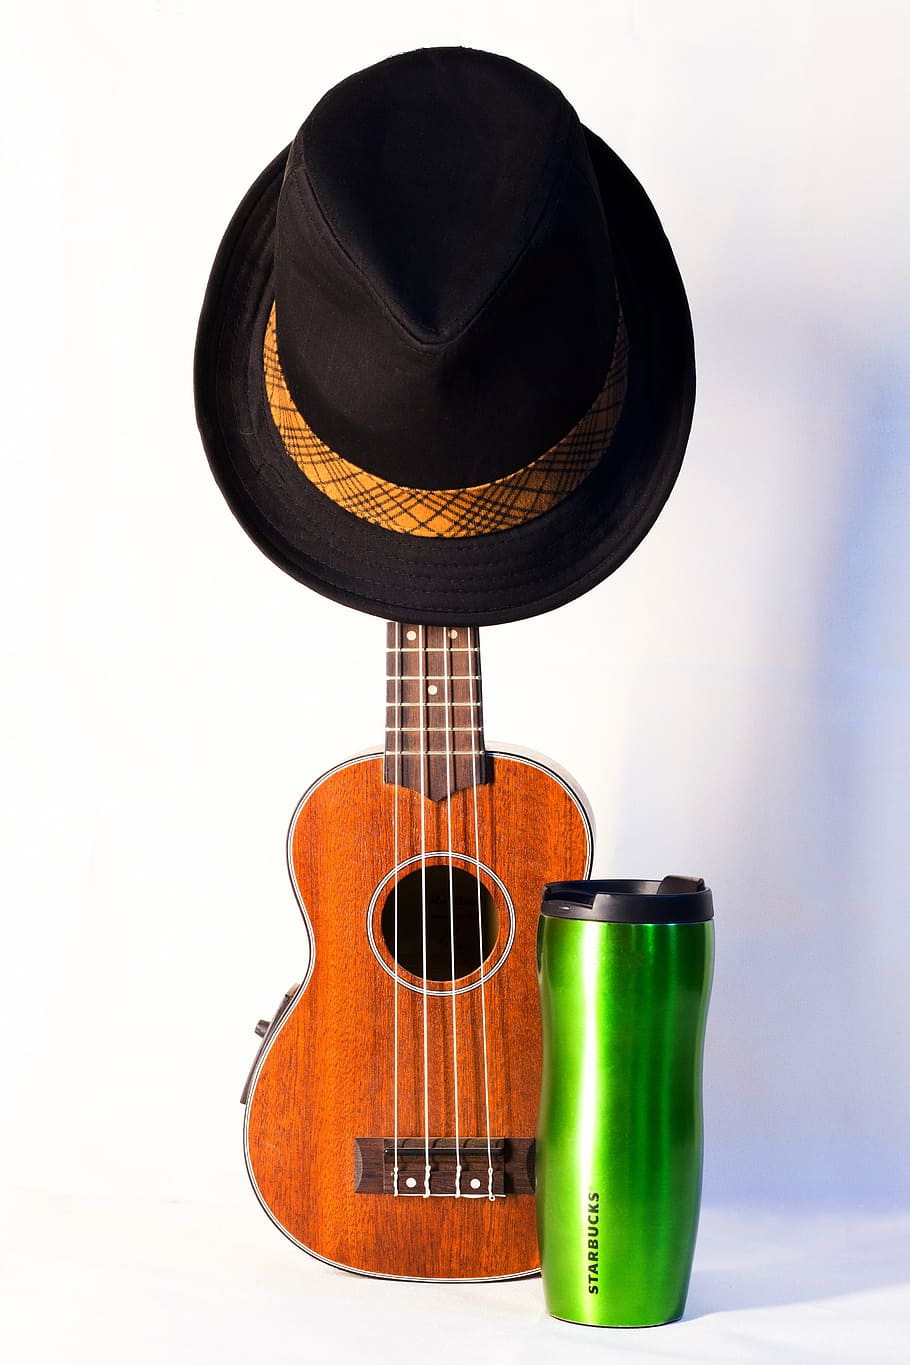 música, ukelele, sombrero, café, viejo, creatividad, instrumento musical, instrumento de cuerda, bodegón, fondo blanco